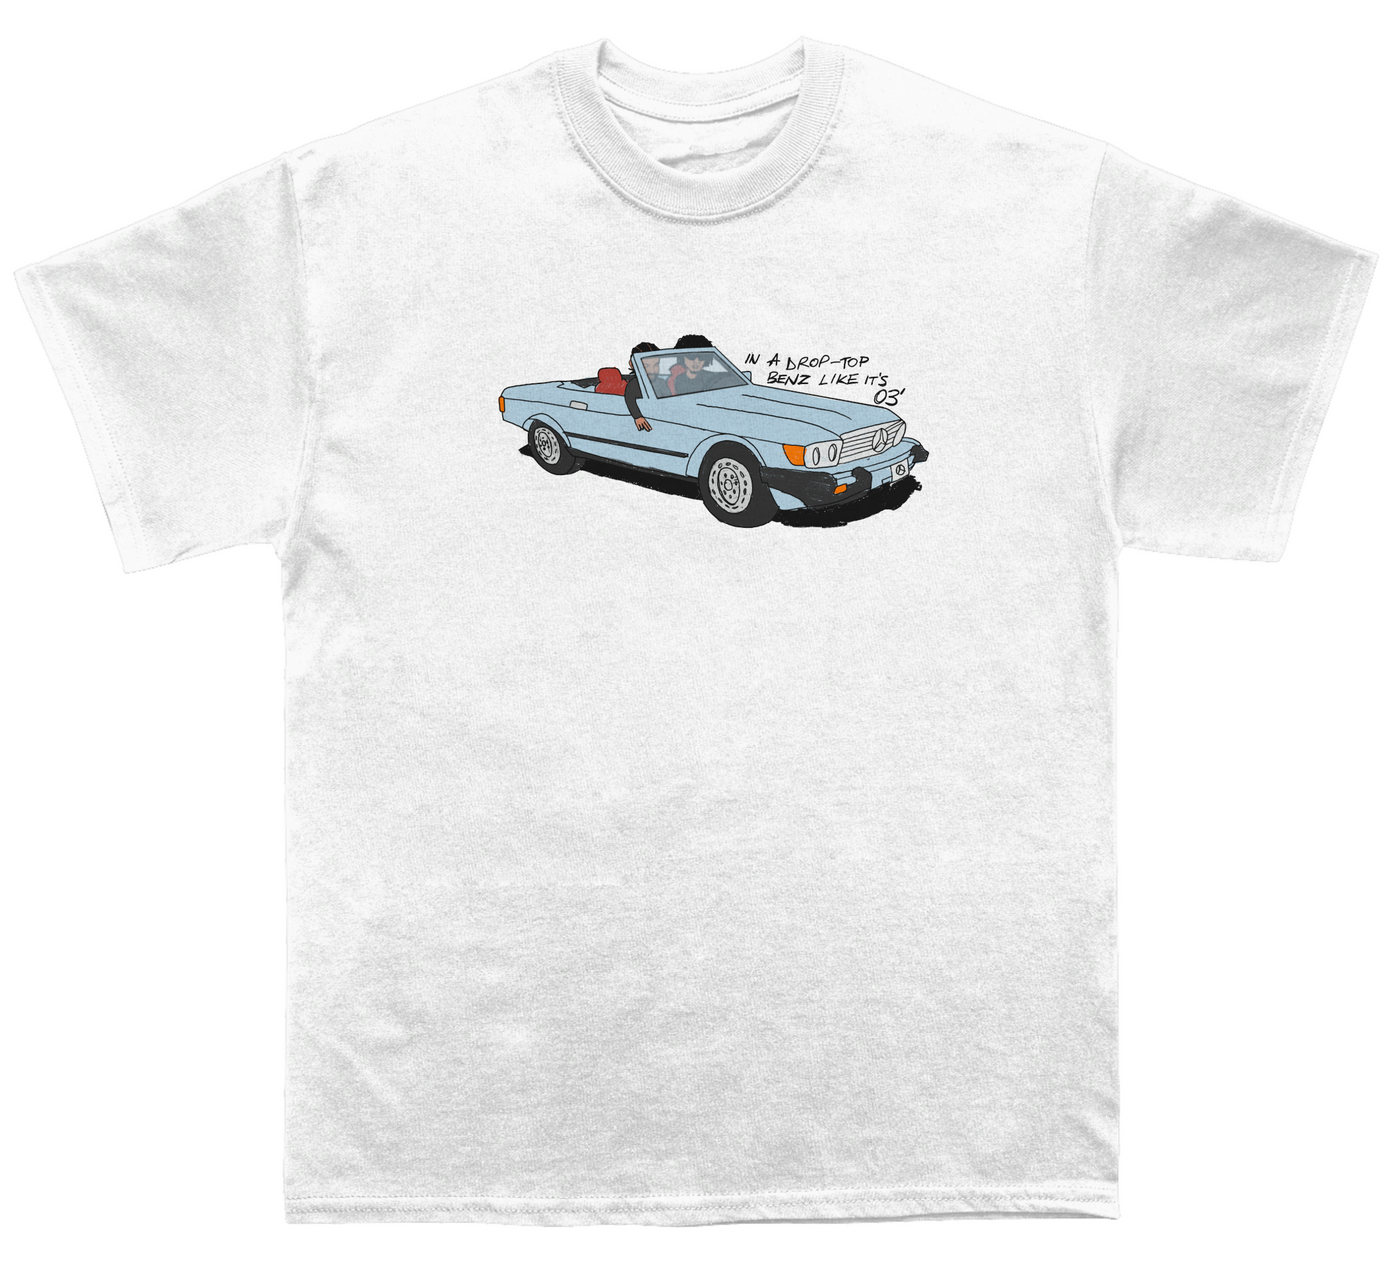 Drizzy & 21 Savage "Drop Top Benz" T-shirt